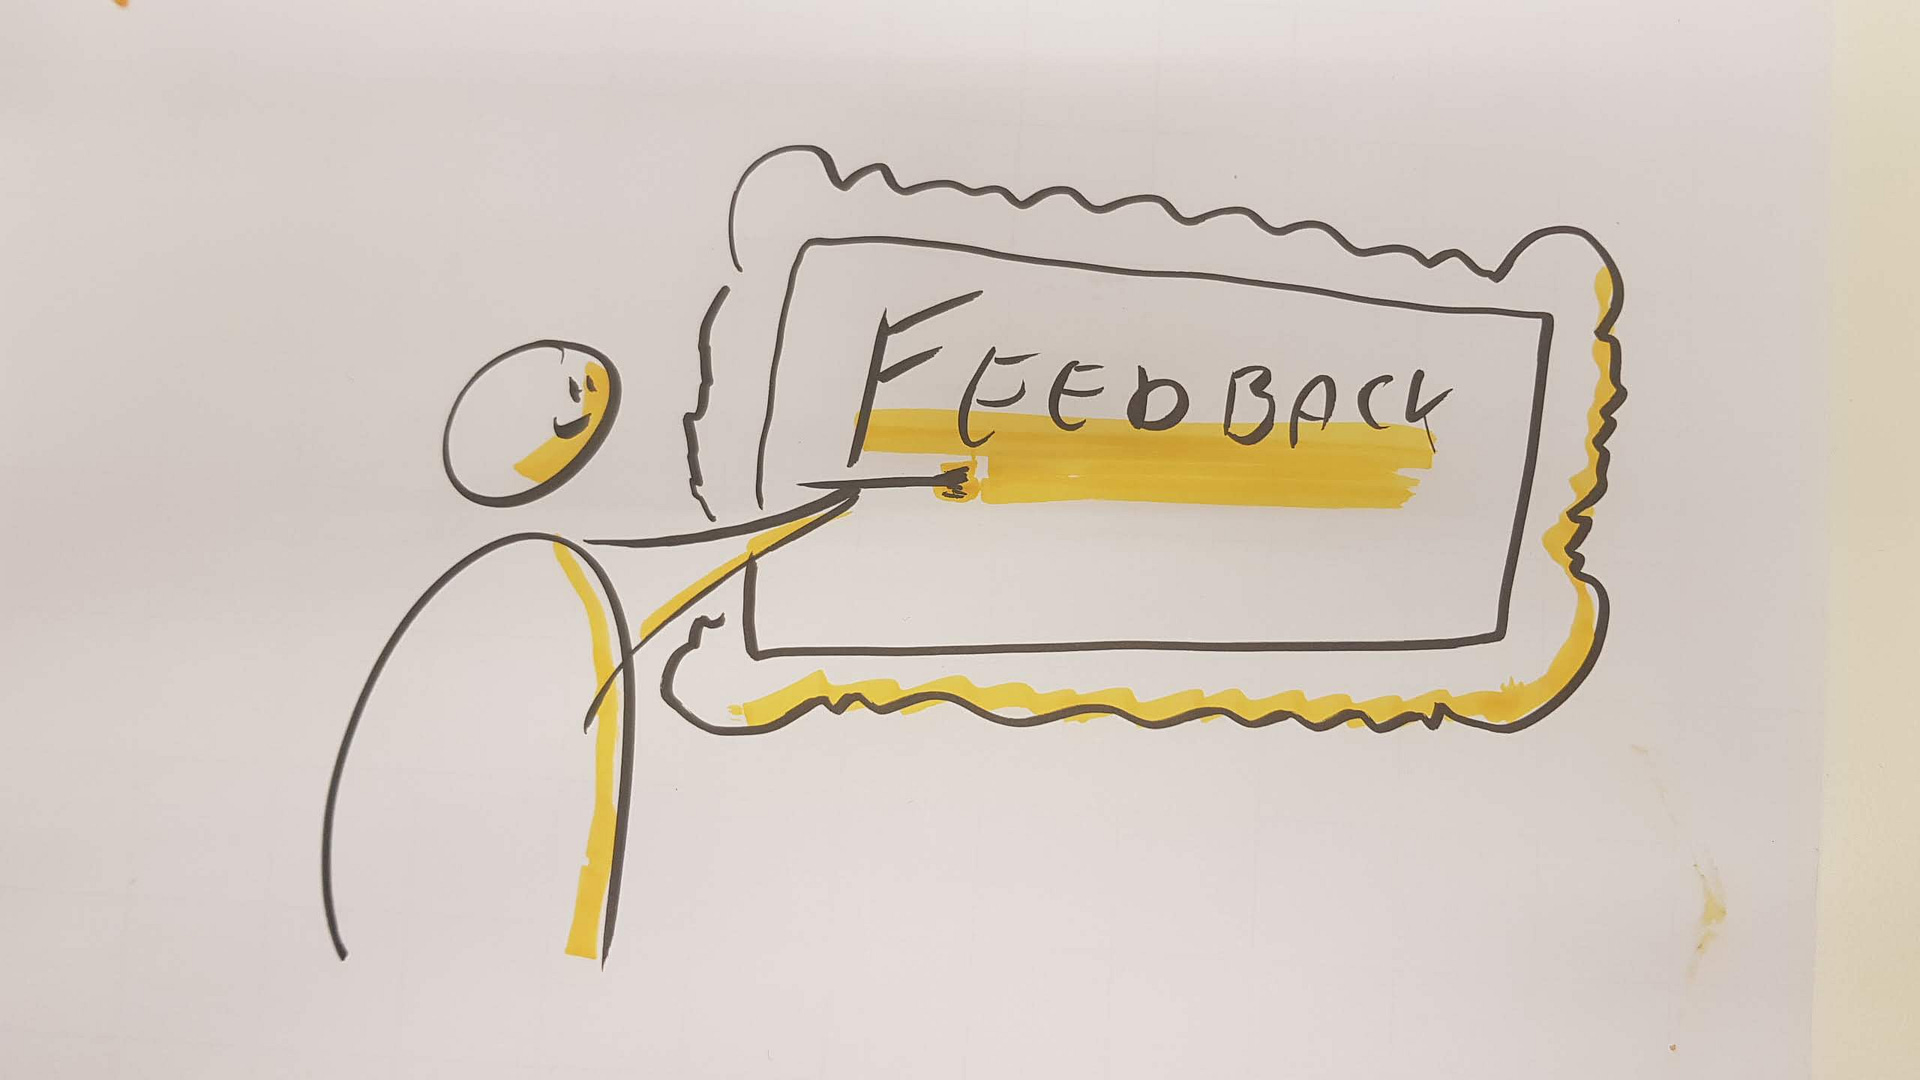 feedback is an art